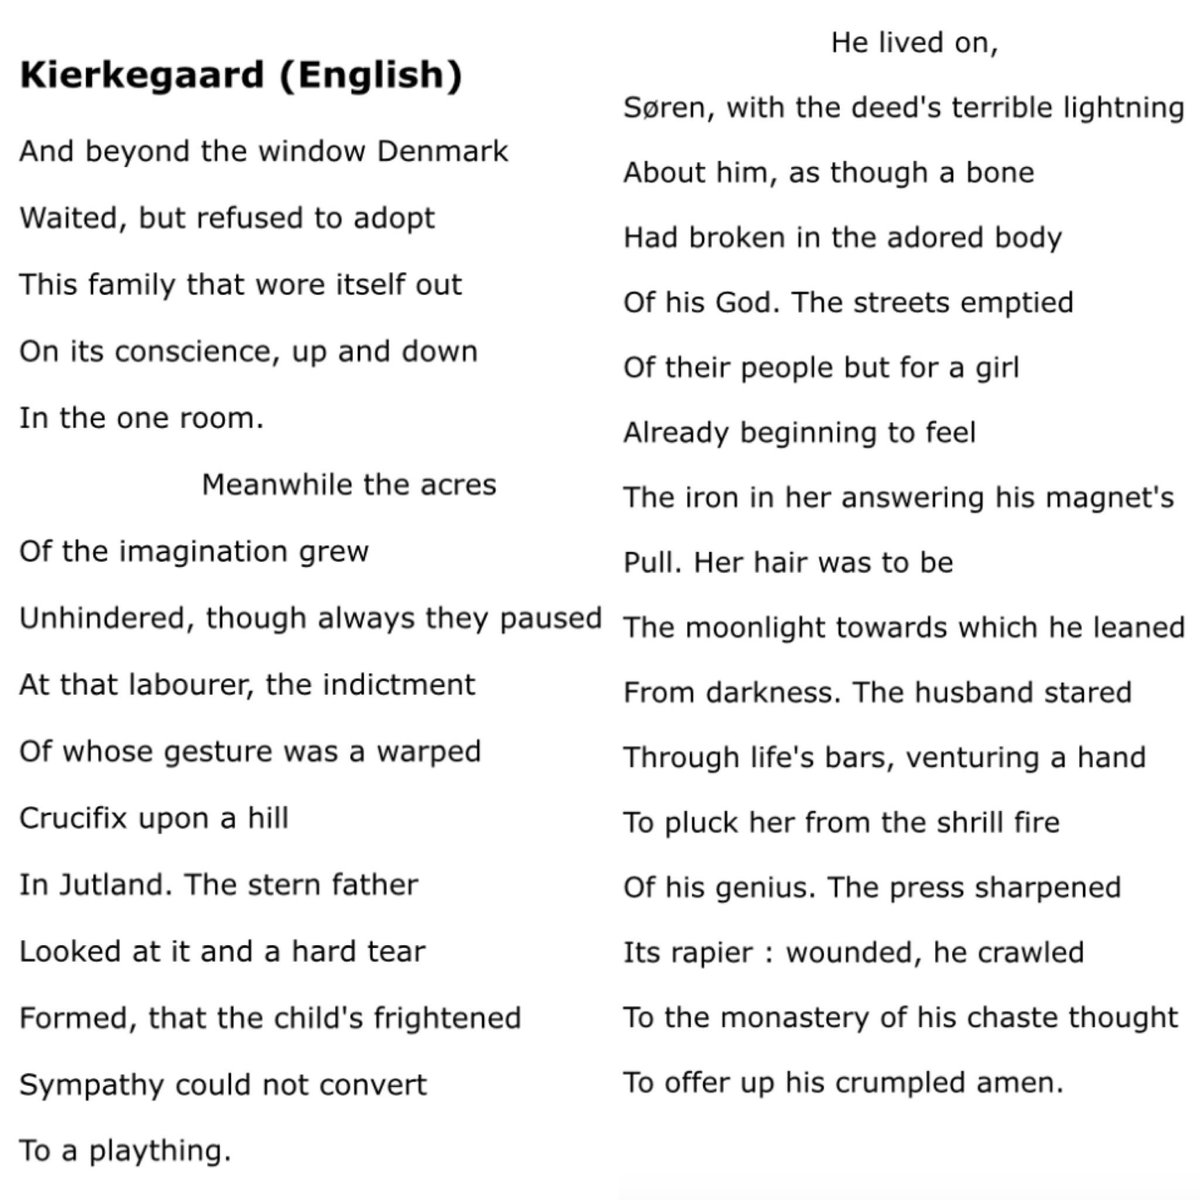 In memory of Kierkegaard on his birthday, a poem from R.S. Thomas: